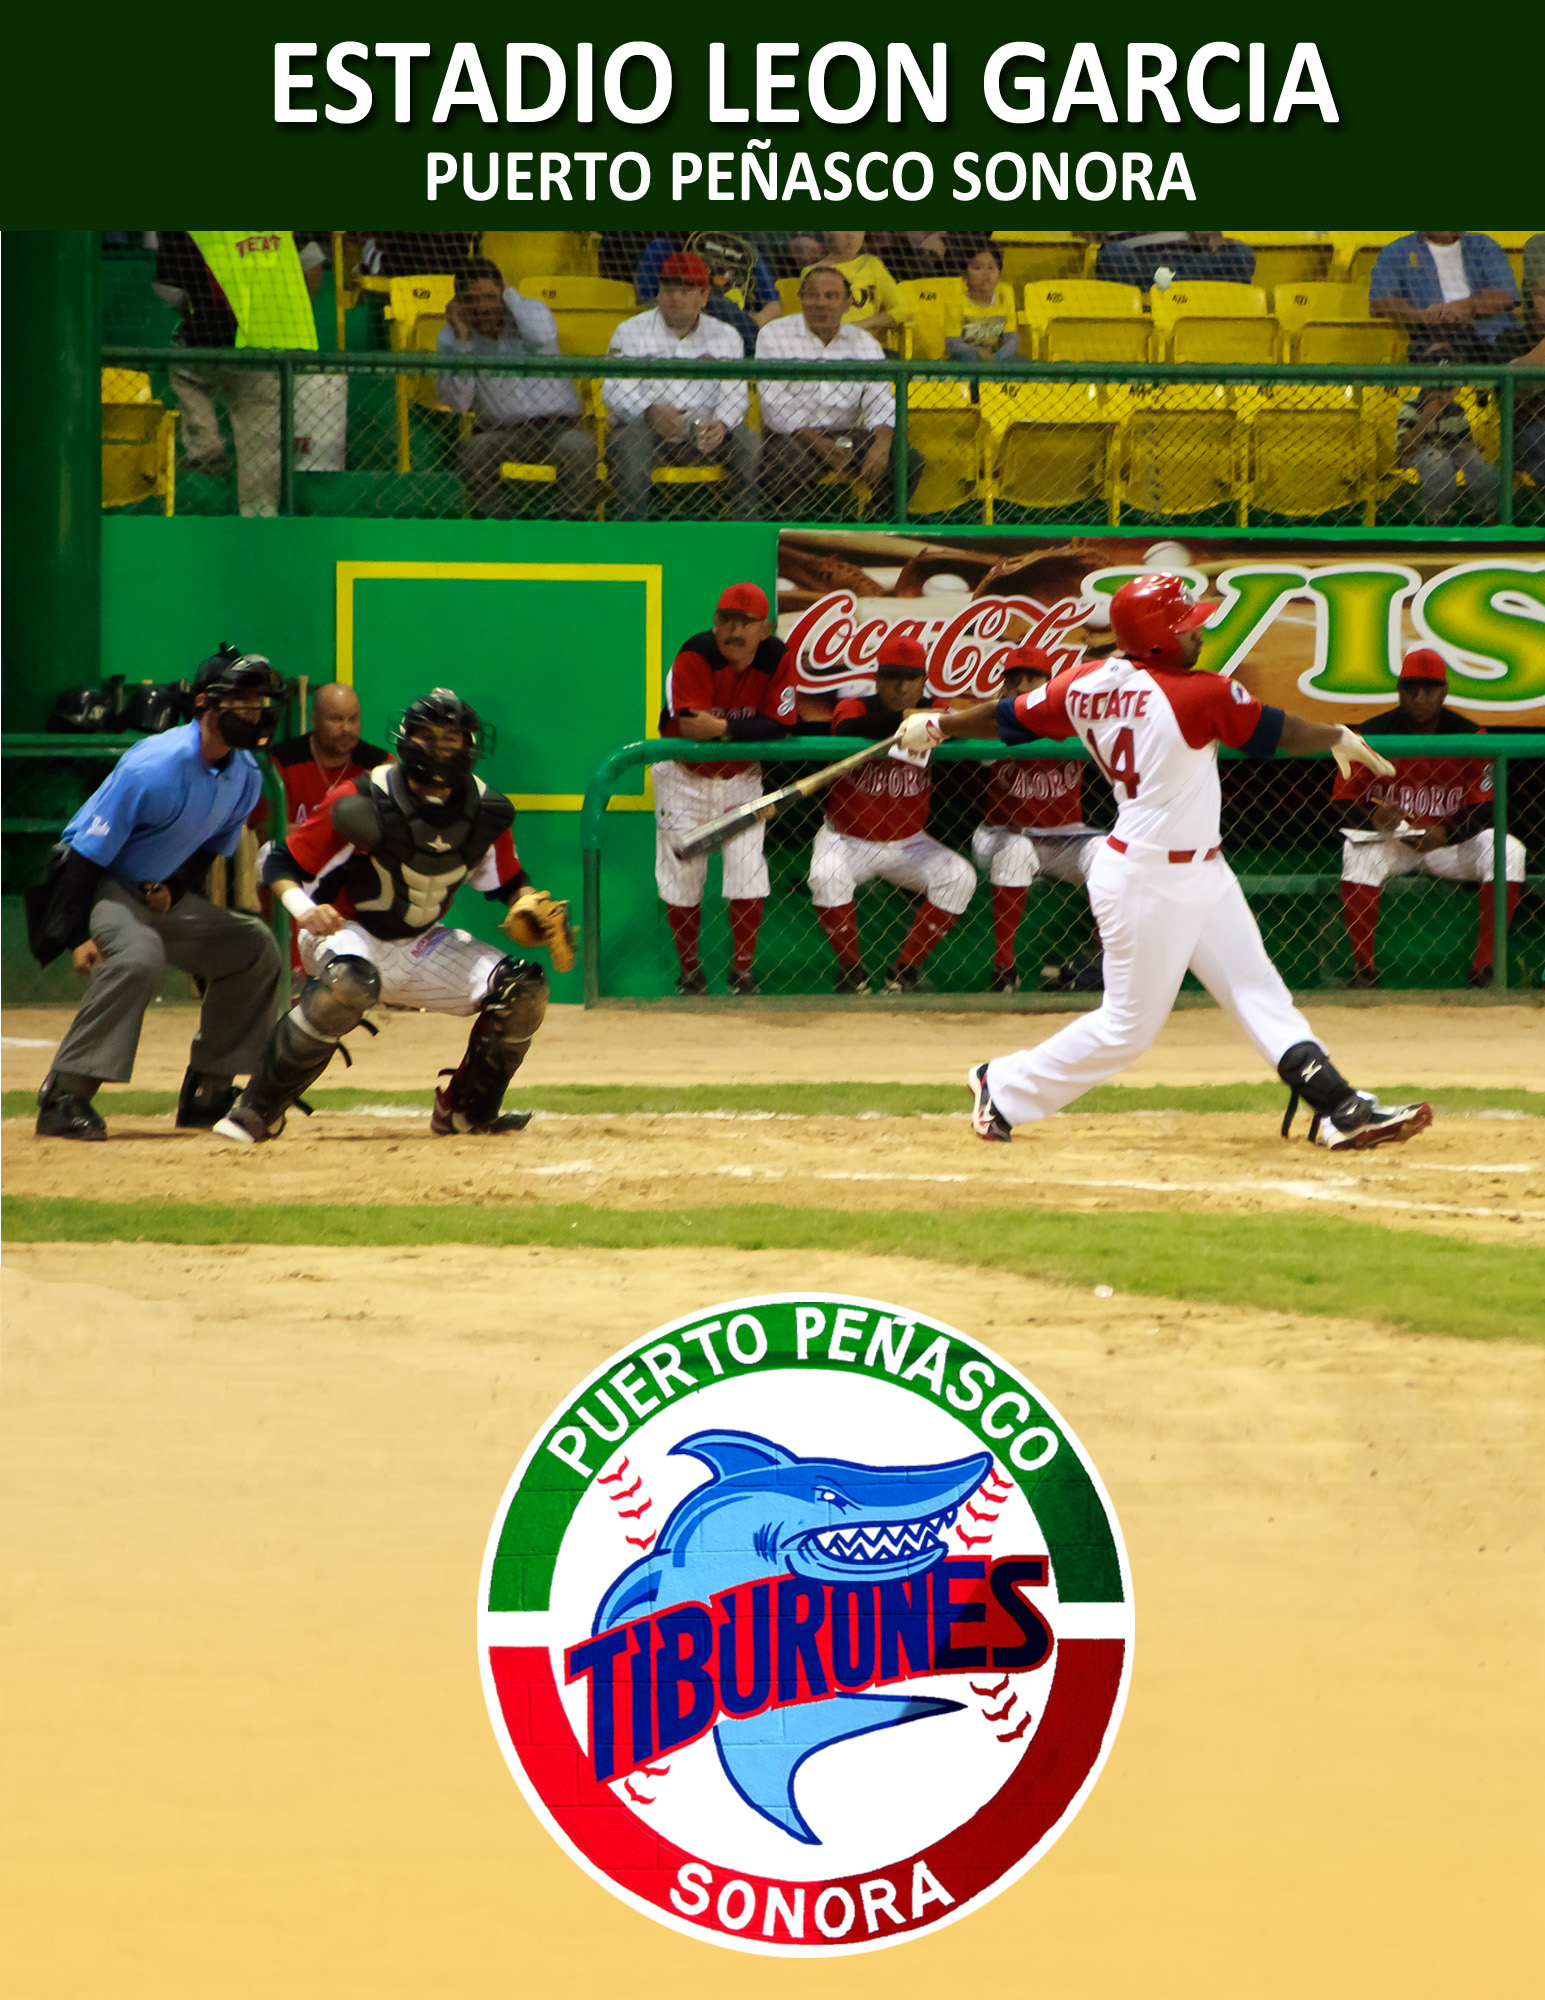 baseball-tiburones-estadio-leon-garcia-poster Tiburones crowned 2013 Champs in dramatic season ending